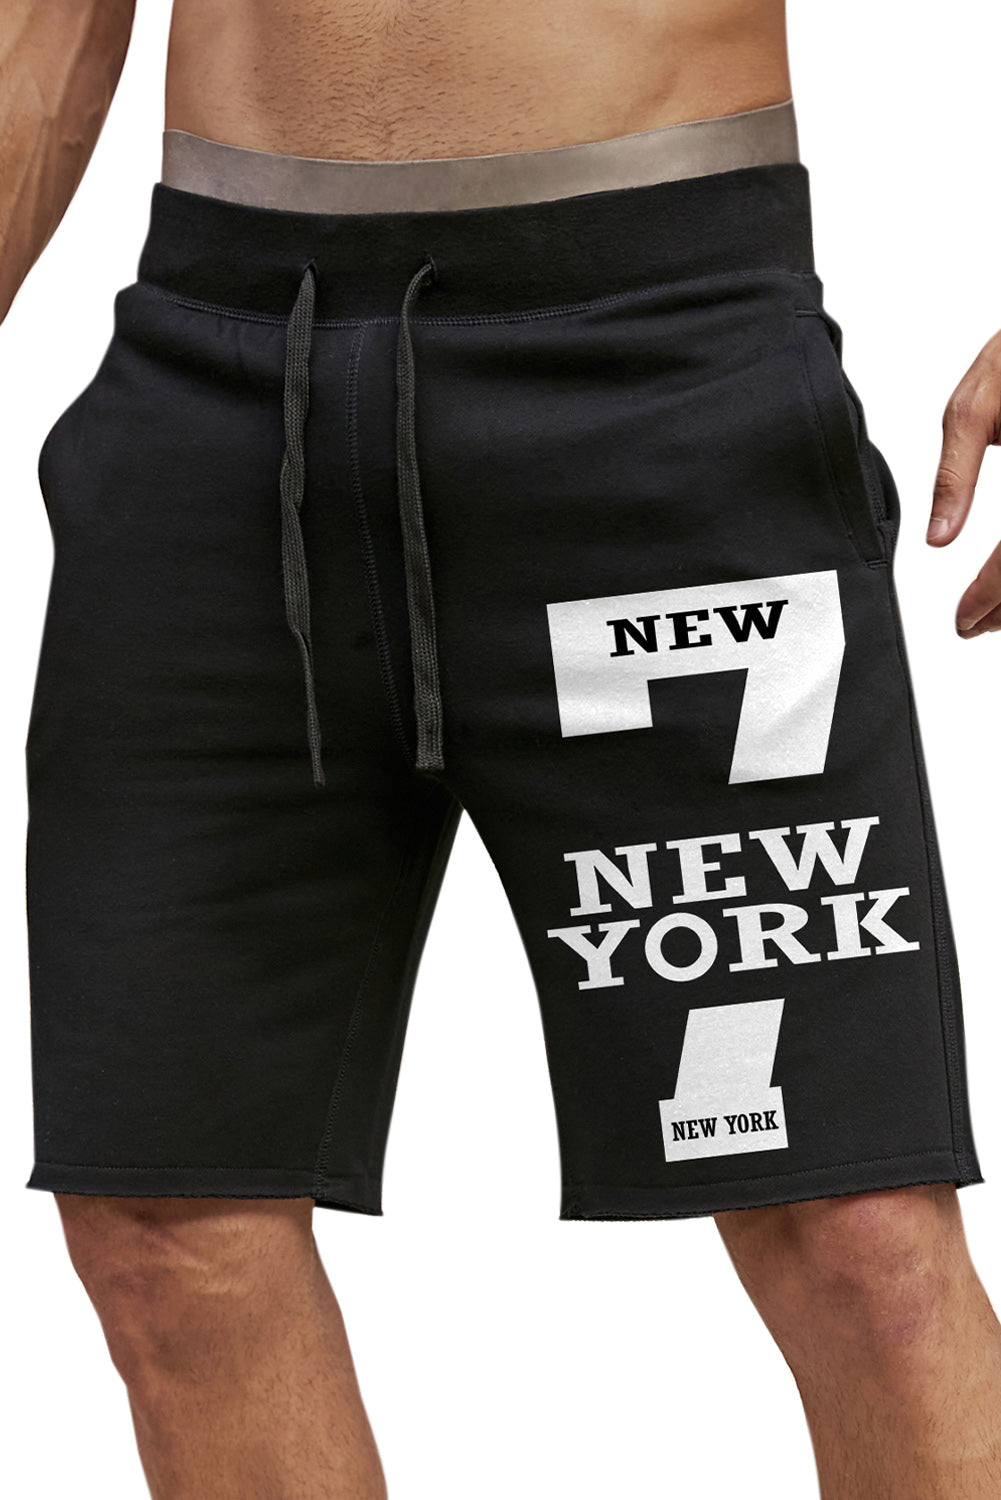 Black New York Number 7 Print Jogging Fitness Drawstring Shorts Men's Pants JT's Designer Fashion